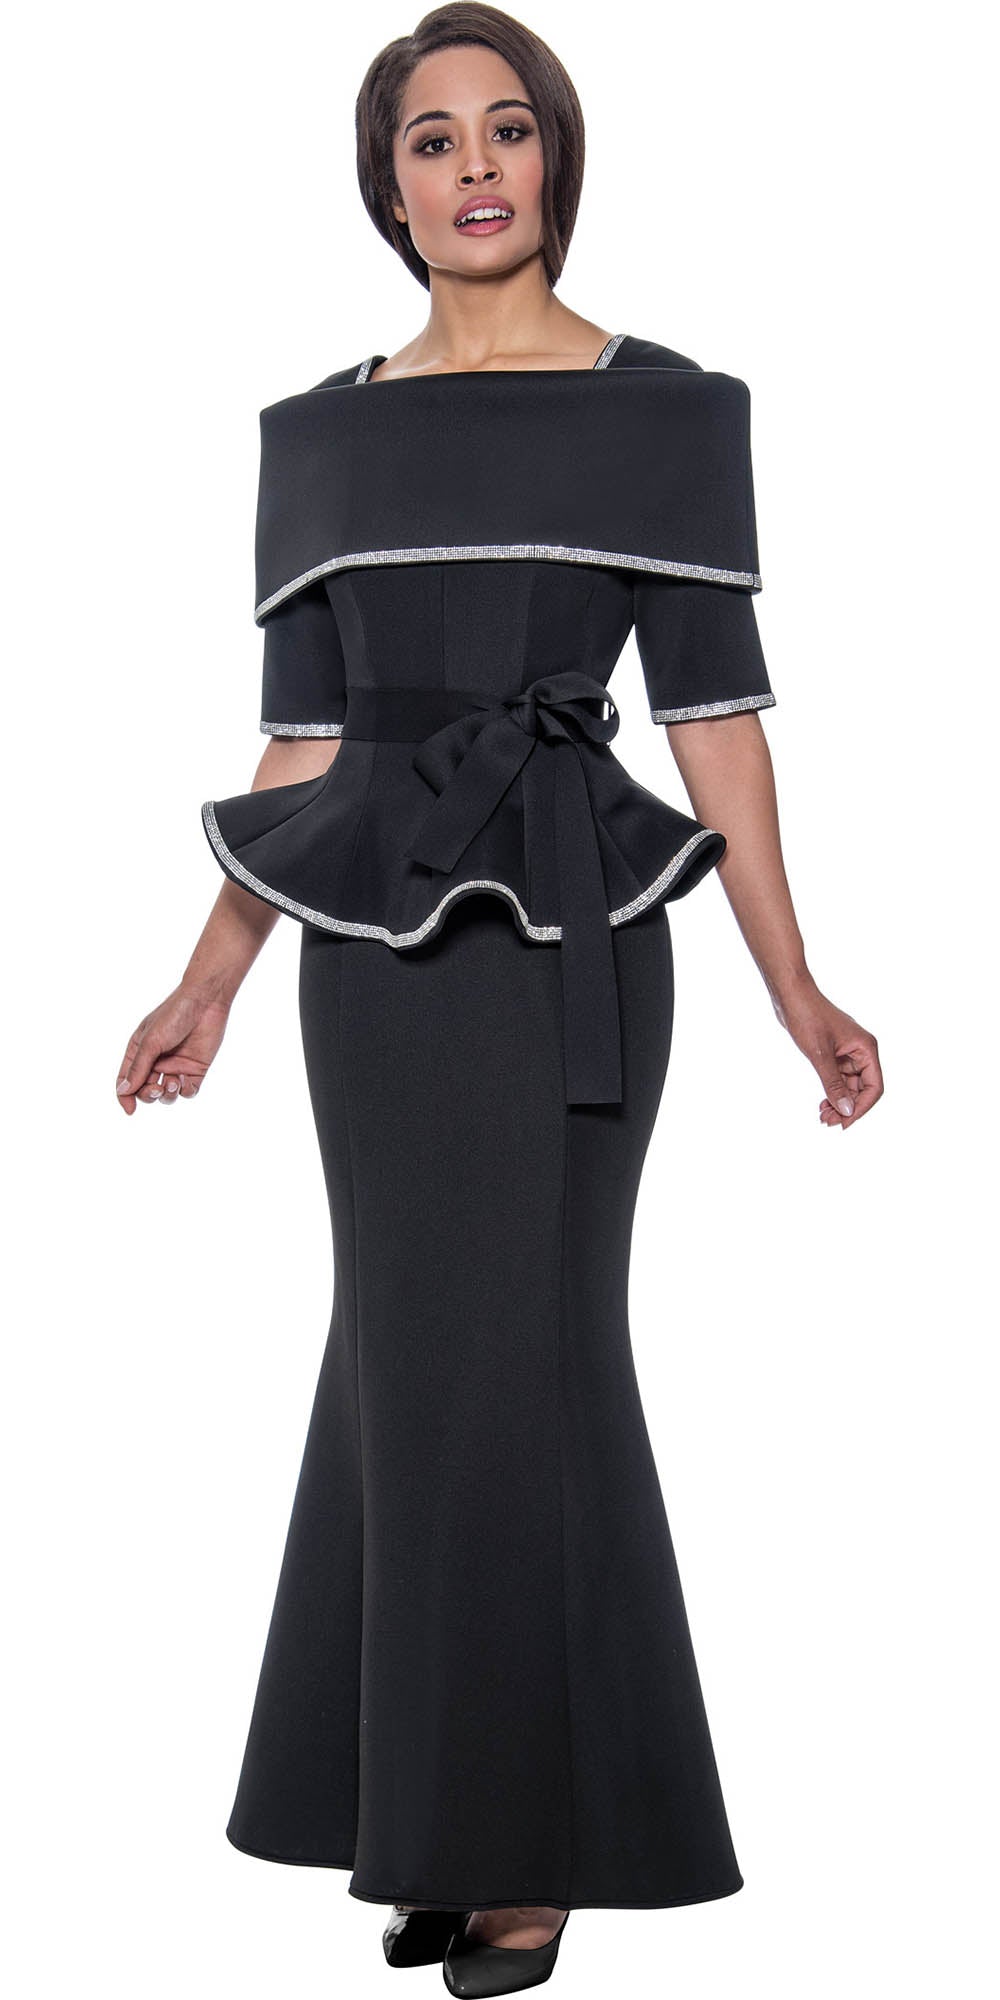 Stellar Looks - SL1692 - 2 PC Black Peplum Portrait Collar Scuba Skirt Suit